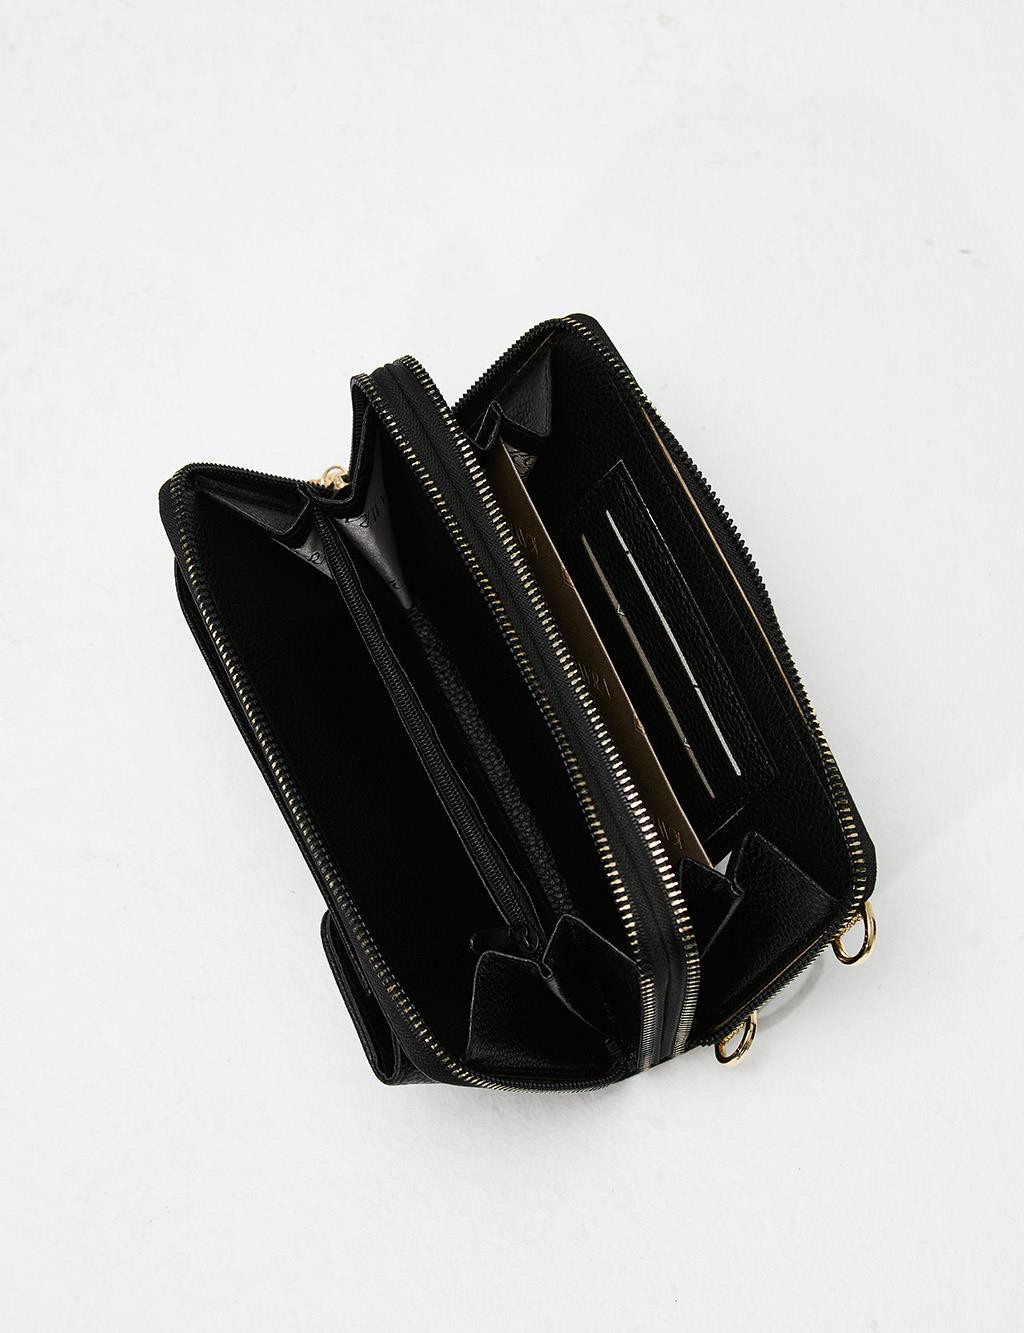 Multifunctional Wallet Bag Black